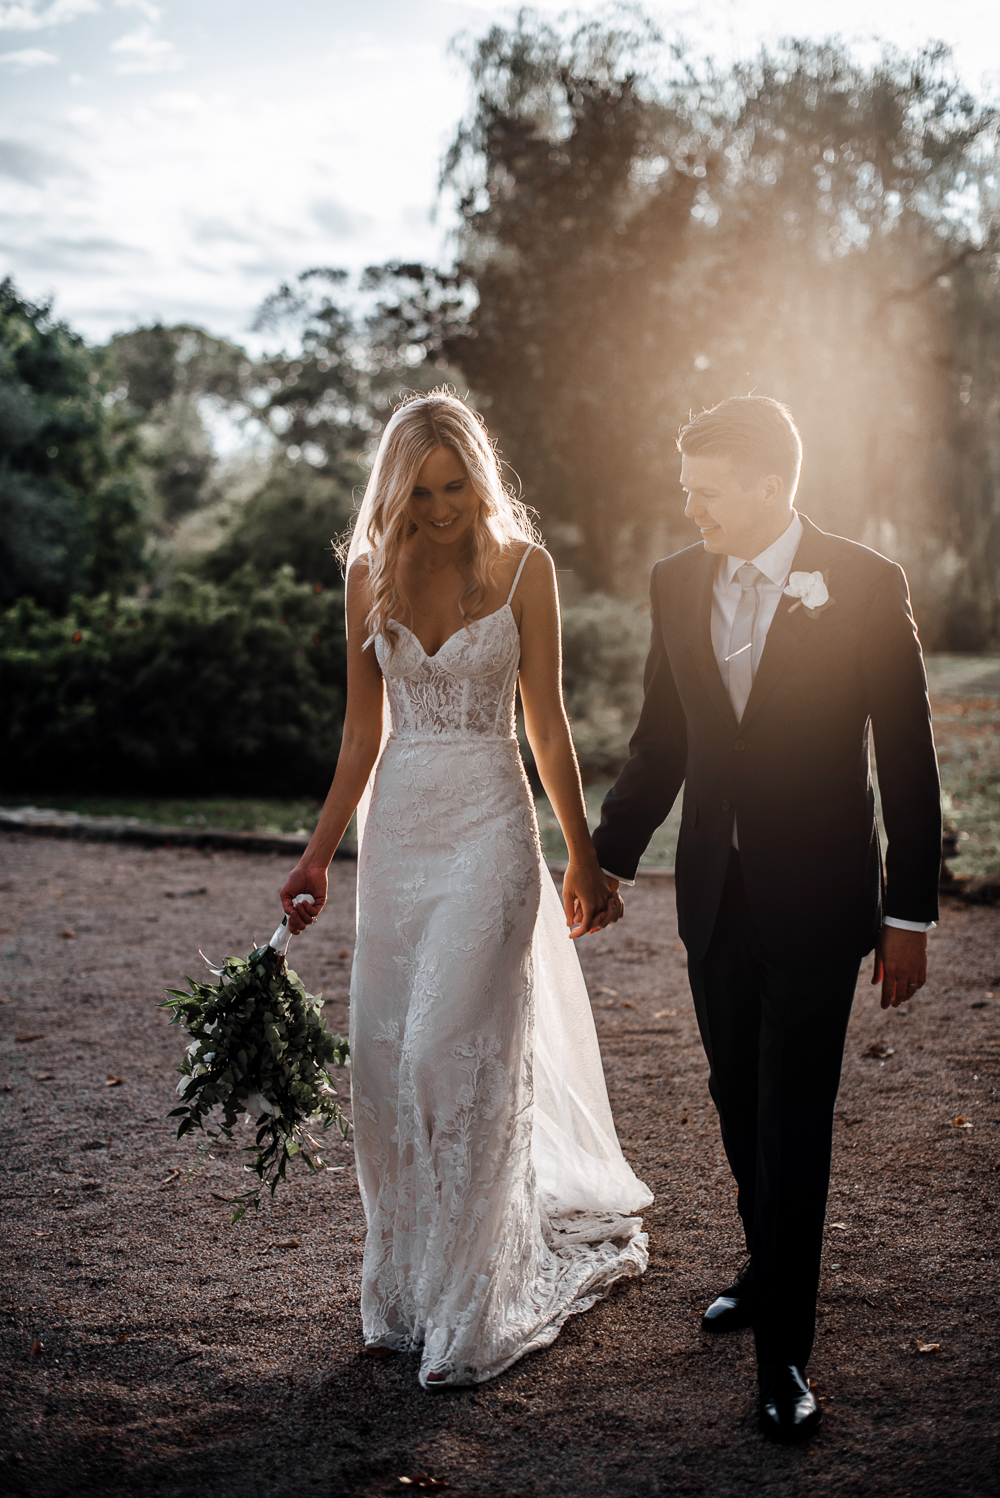 Marisa & Cliff's beautiful Provencewedding